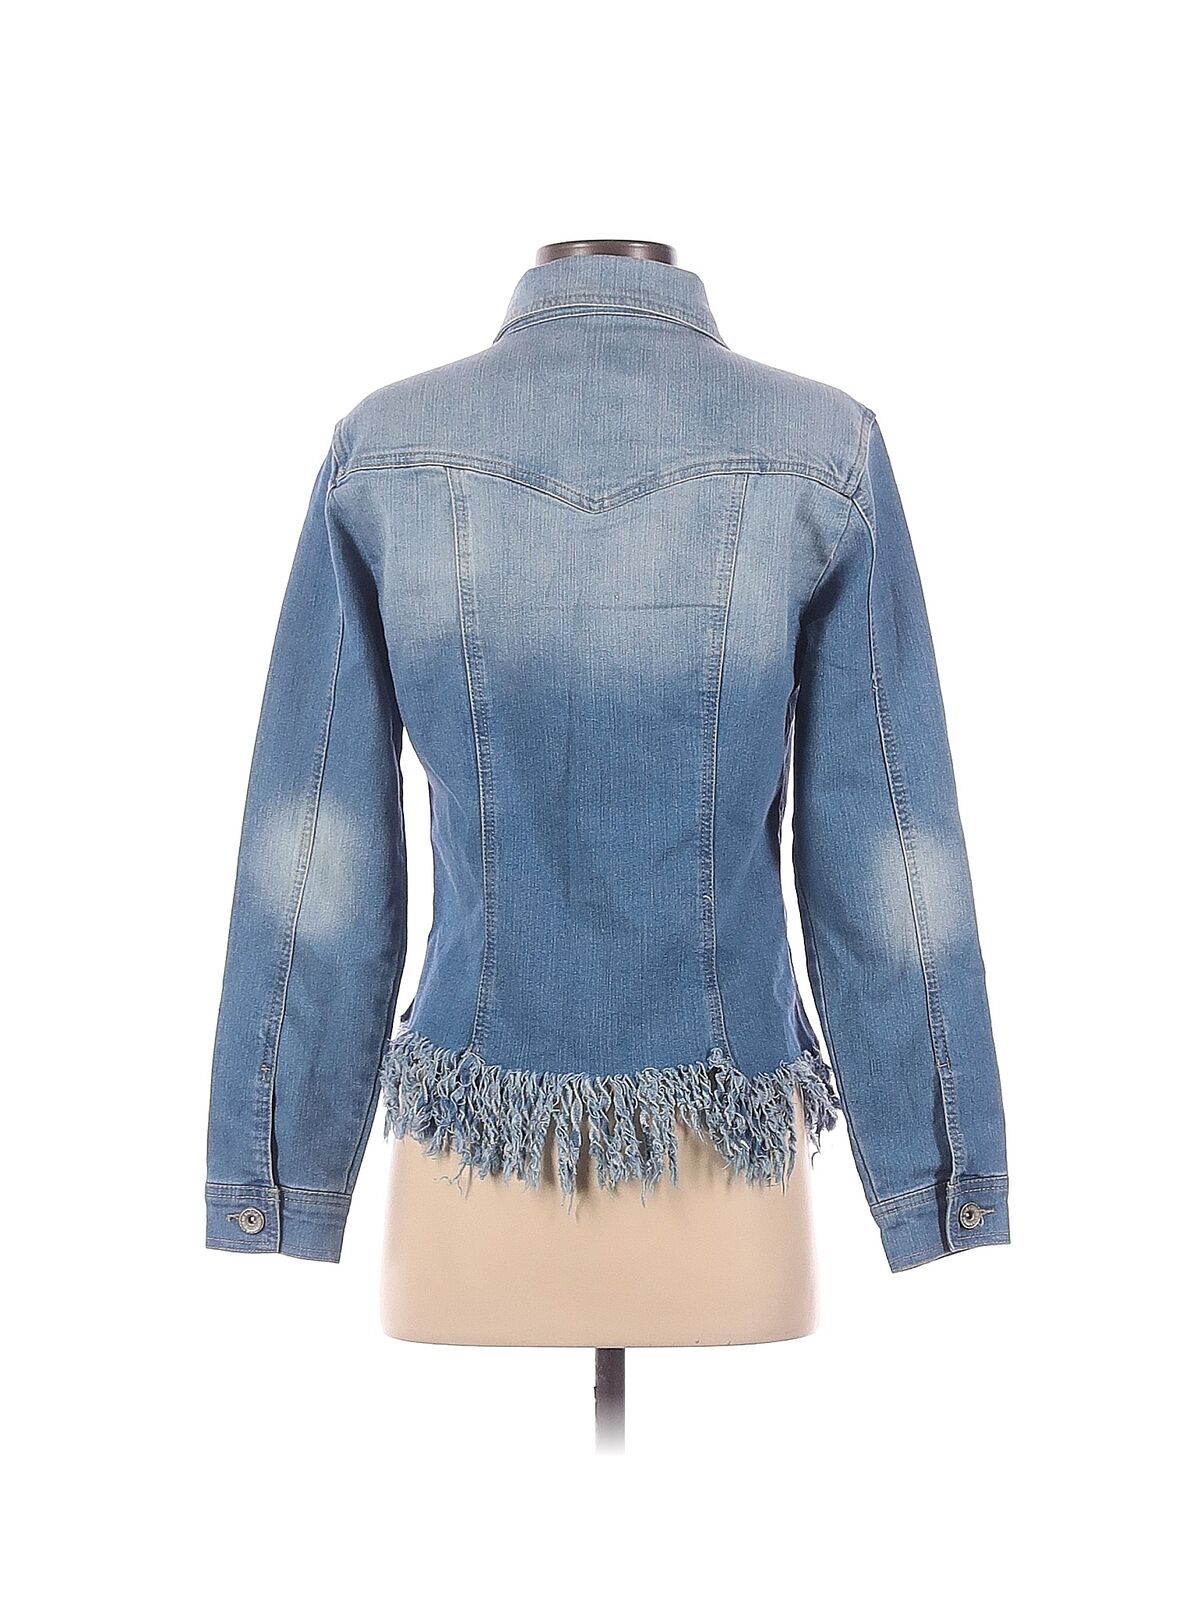 LAL Live A Little Women Blue Denim Jacket S | eBay